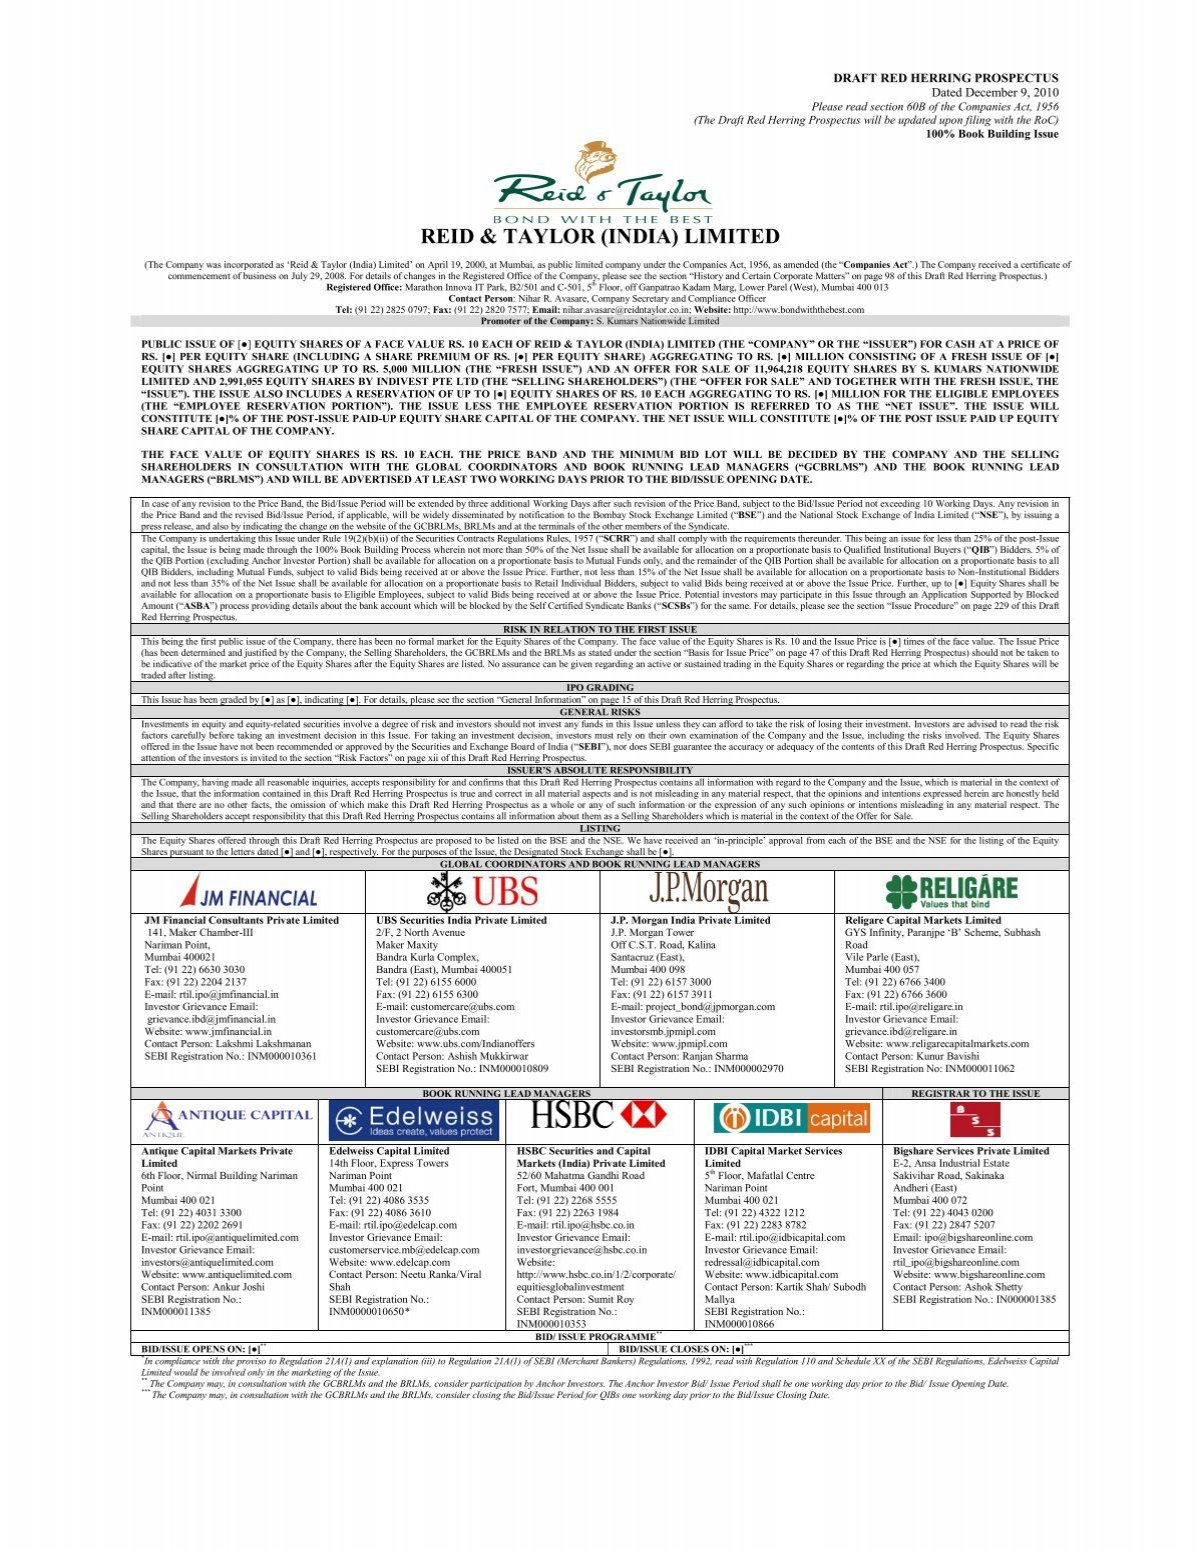 Reid & Taylor (India) Limited: Draft Red Herring Prospectus - HSBC